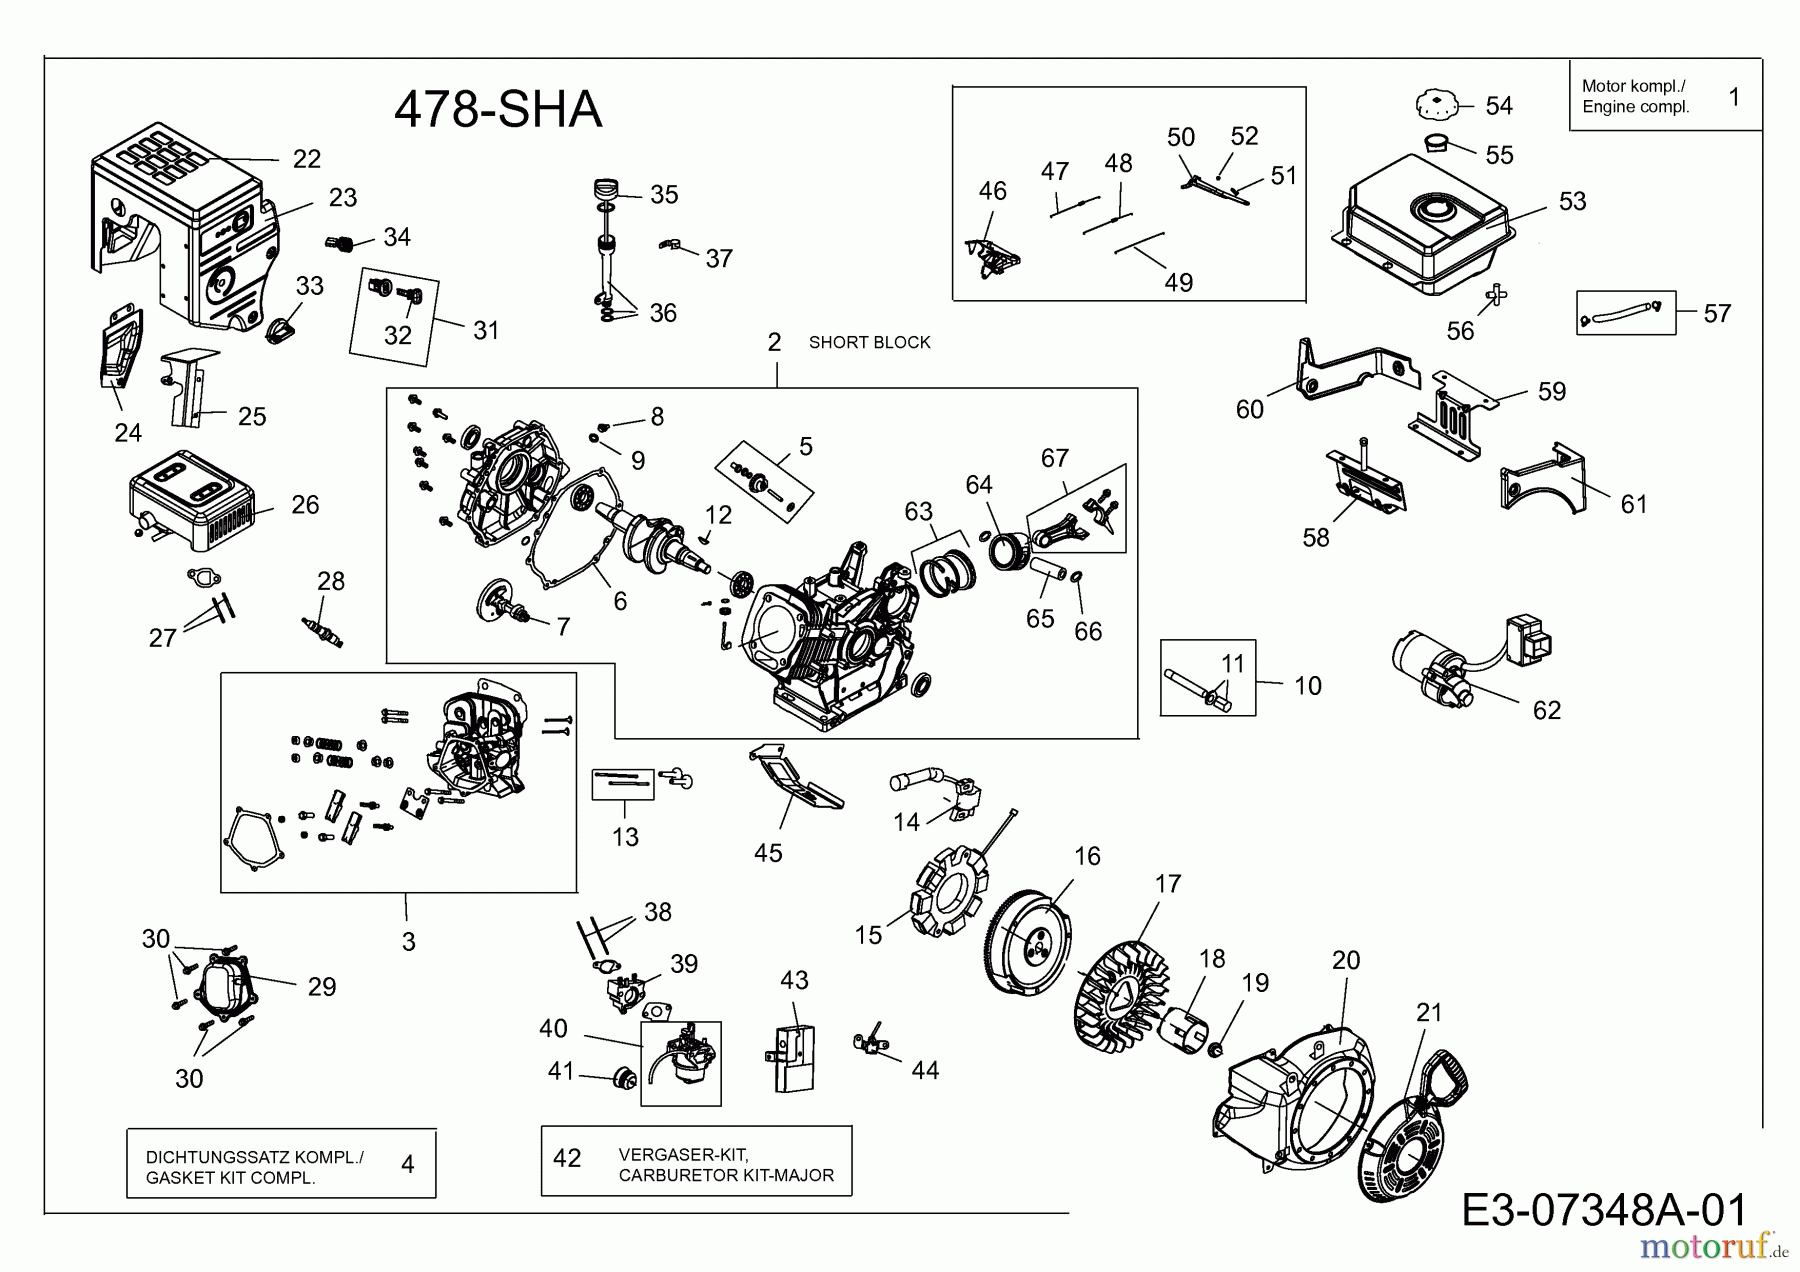  MTD-Engines Horizontal 478-SHA 752Z478-SHA  (2012) Engine